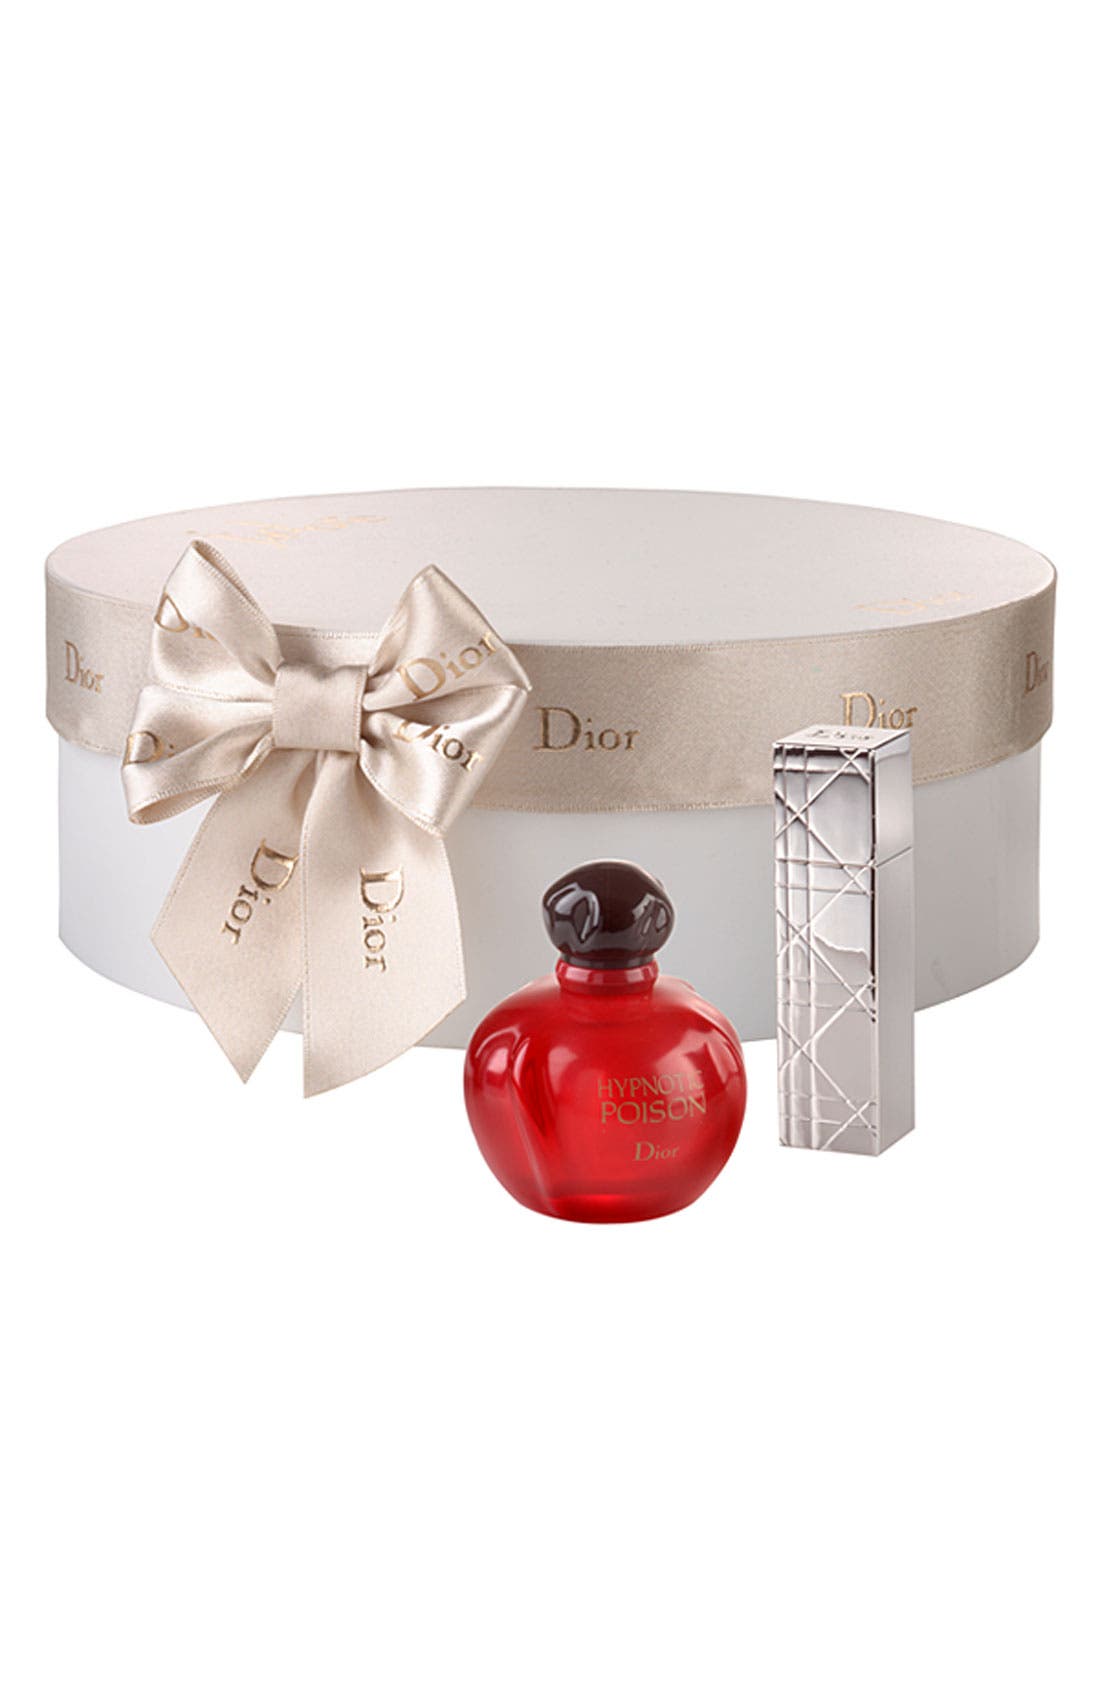 Dior 'Hypnotic Poison' Jewel Box Set 